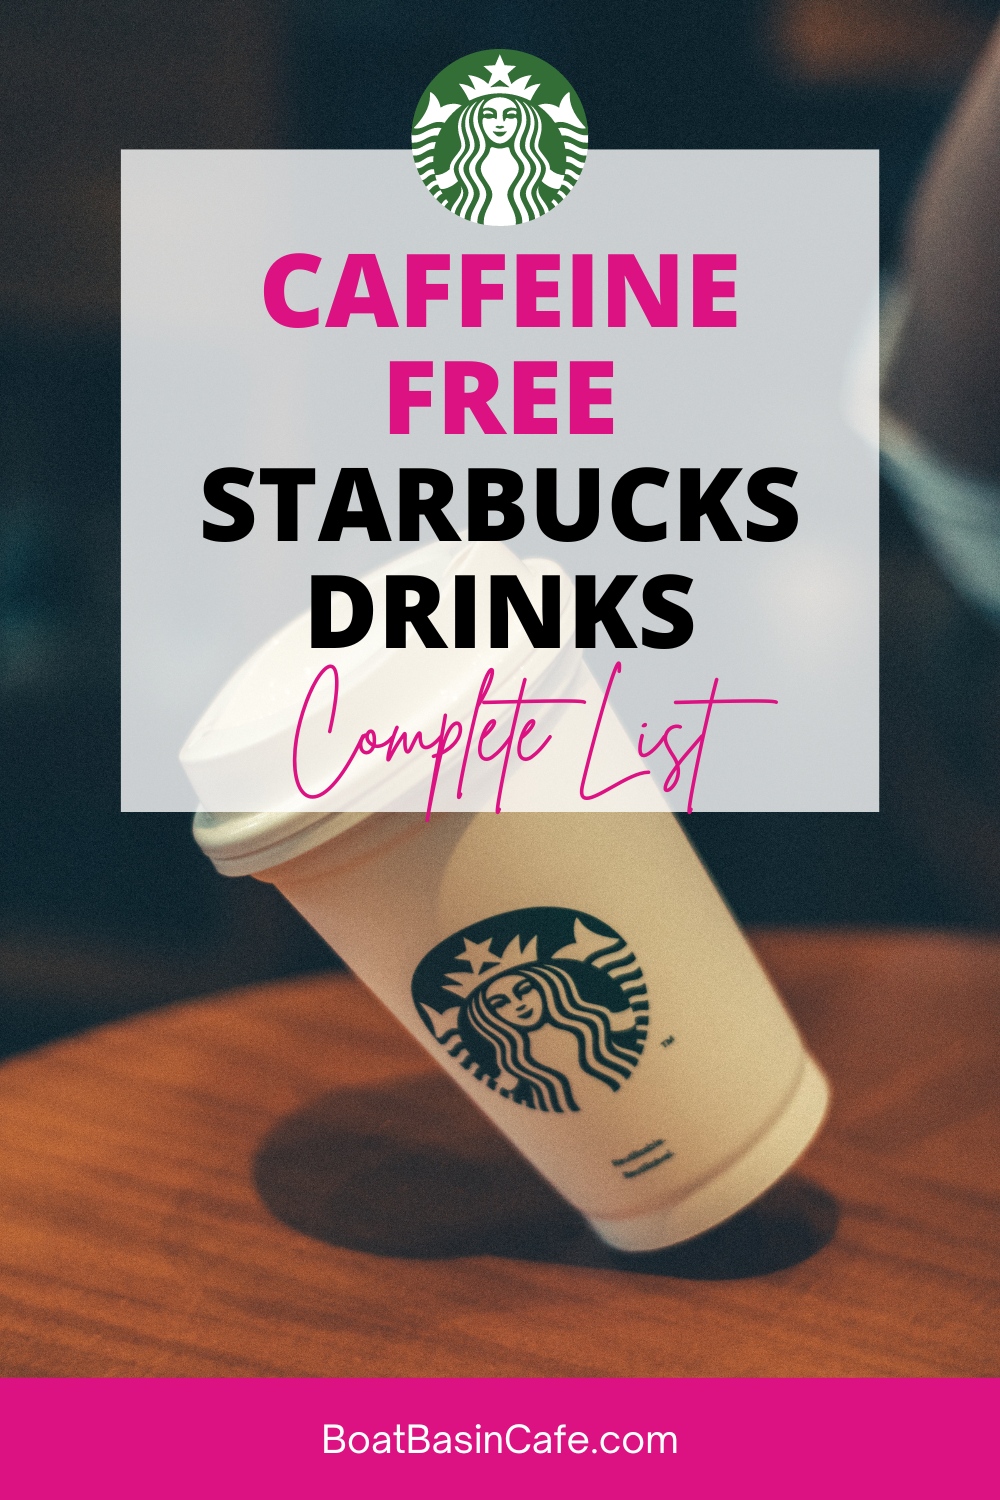 The Complete List of Caffeine Free Starbucks Drinks